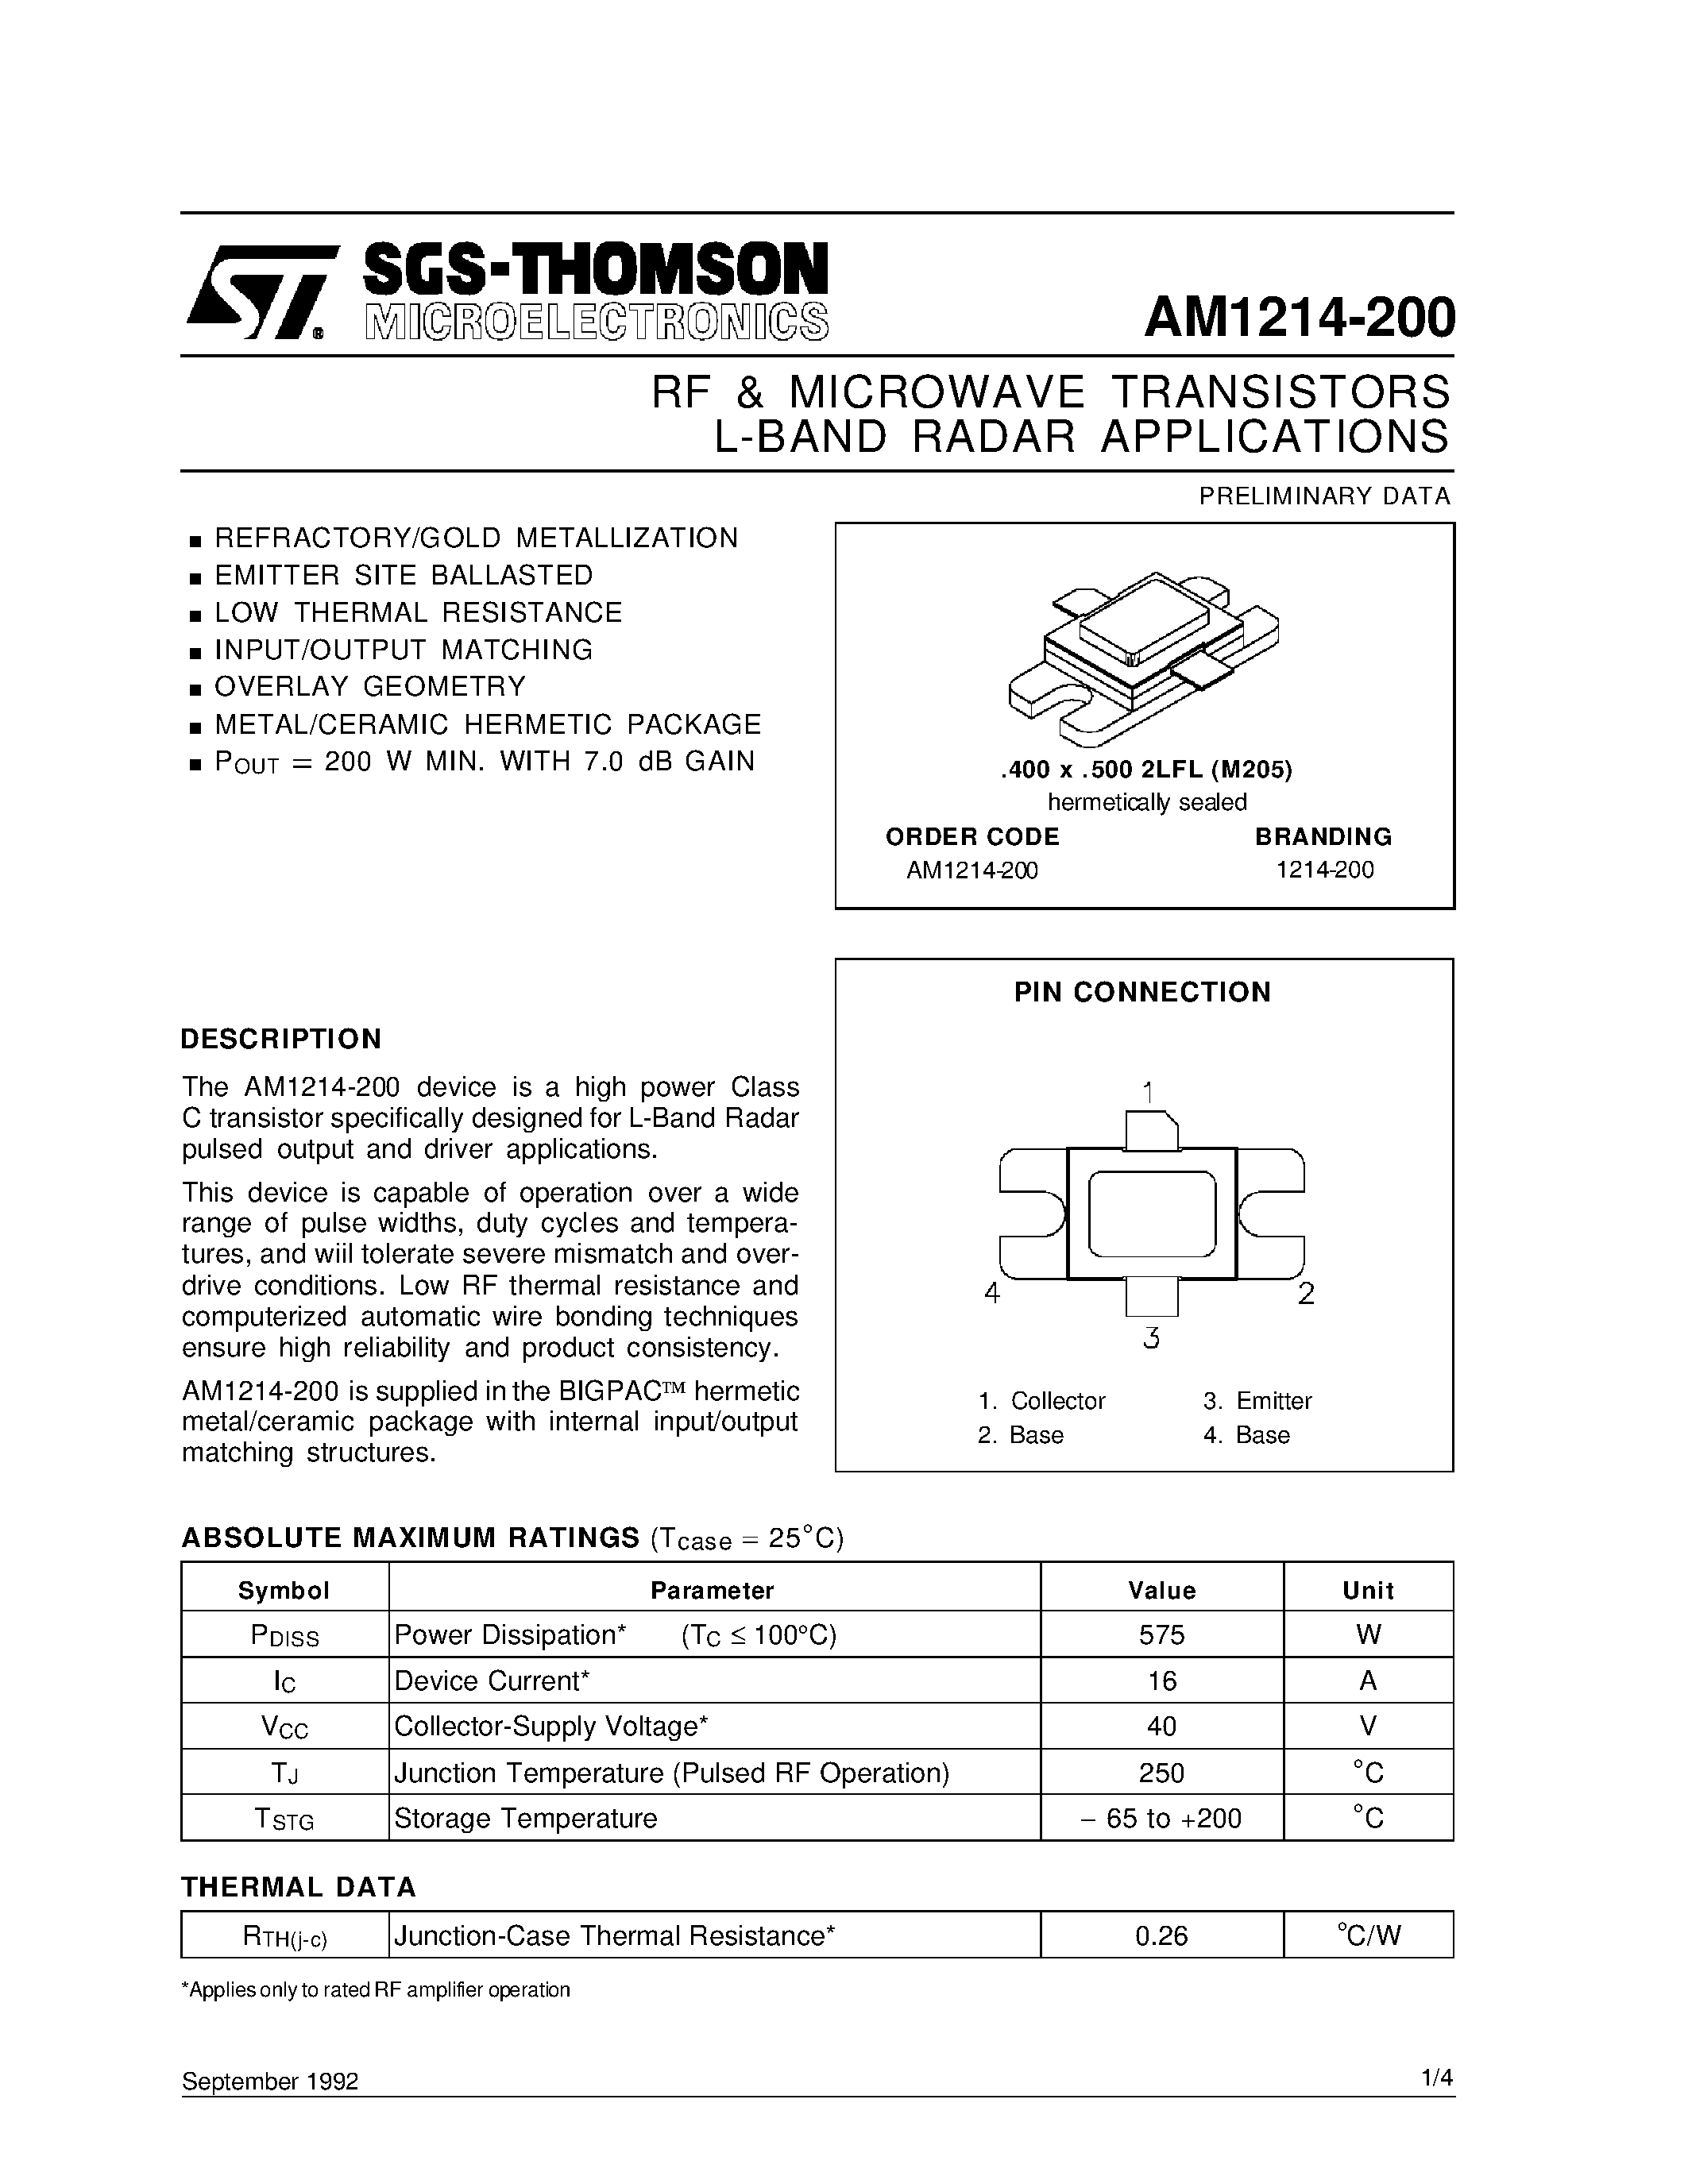 Datasheet AM1214-200 - L-BAND RADAR APPLICATIONS RF & MICROWAVE TRANSISTORS page 1